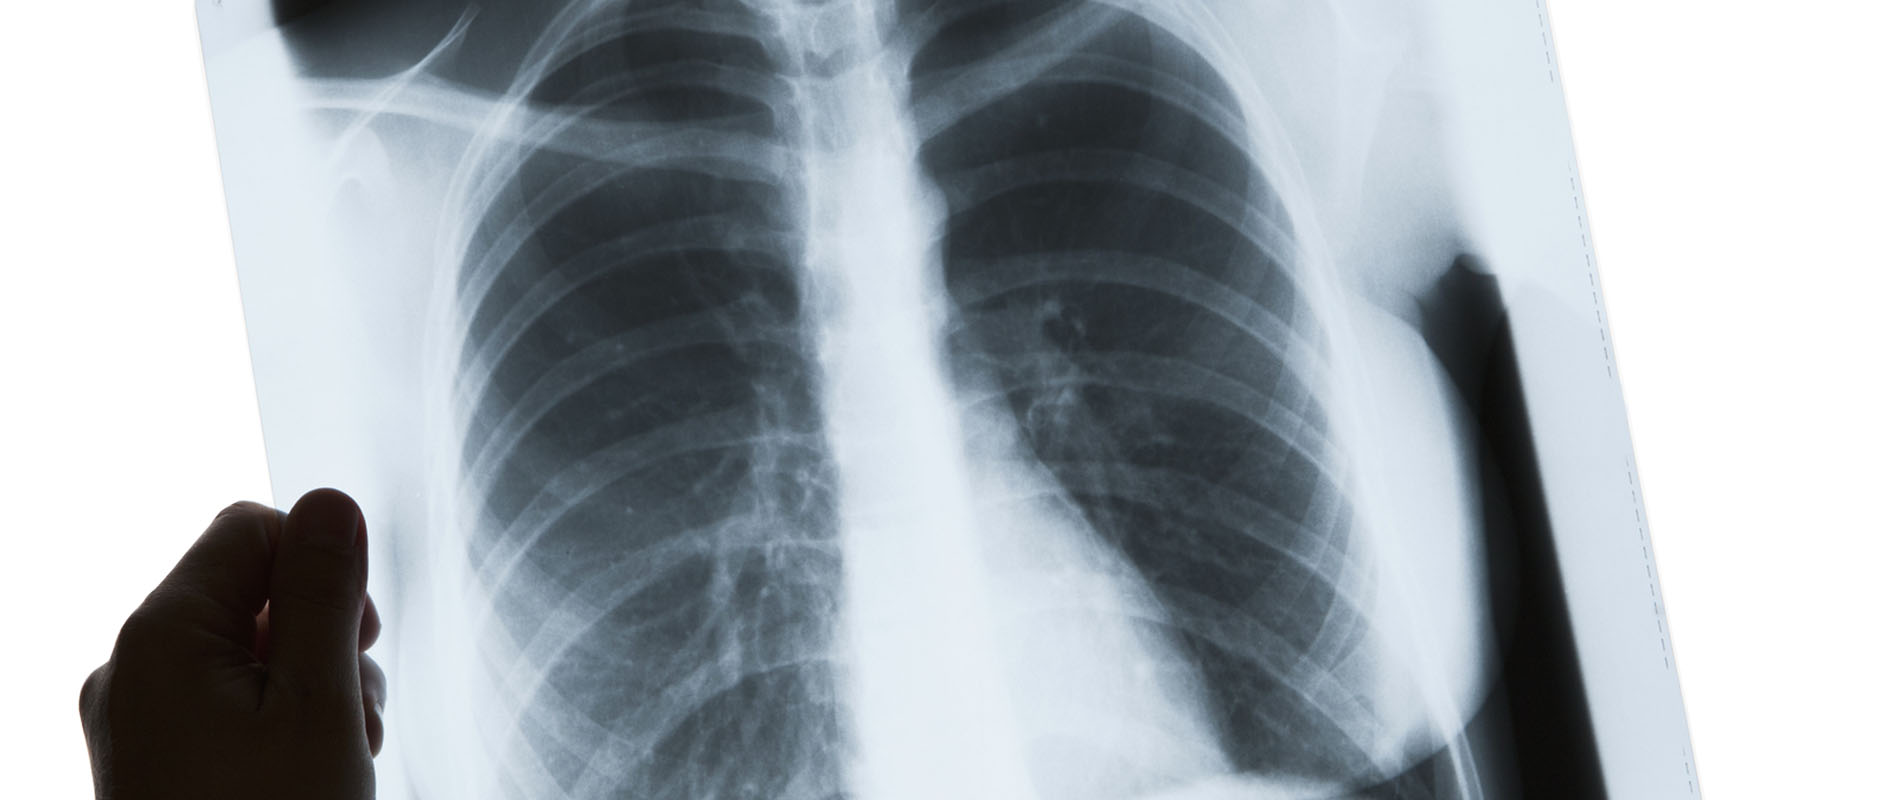 RTI Multi modalities X-ray